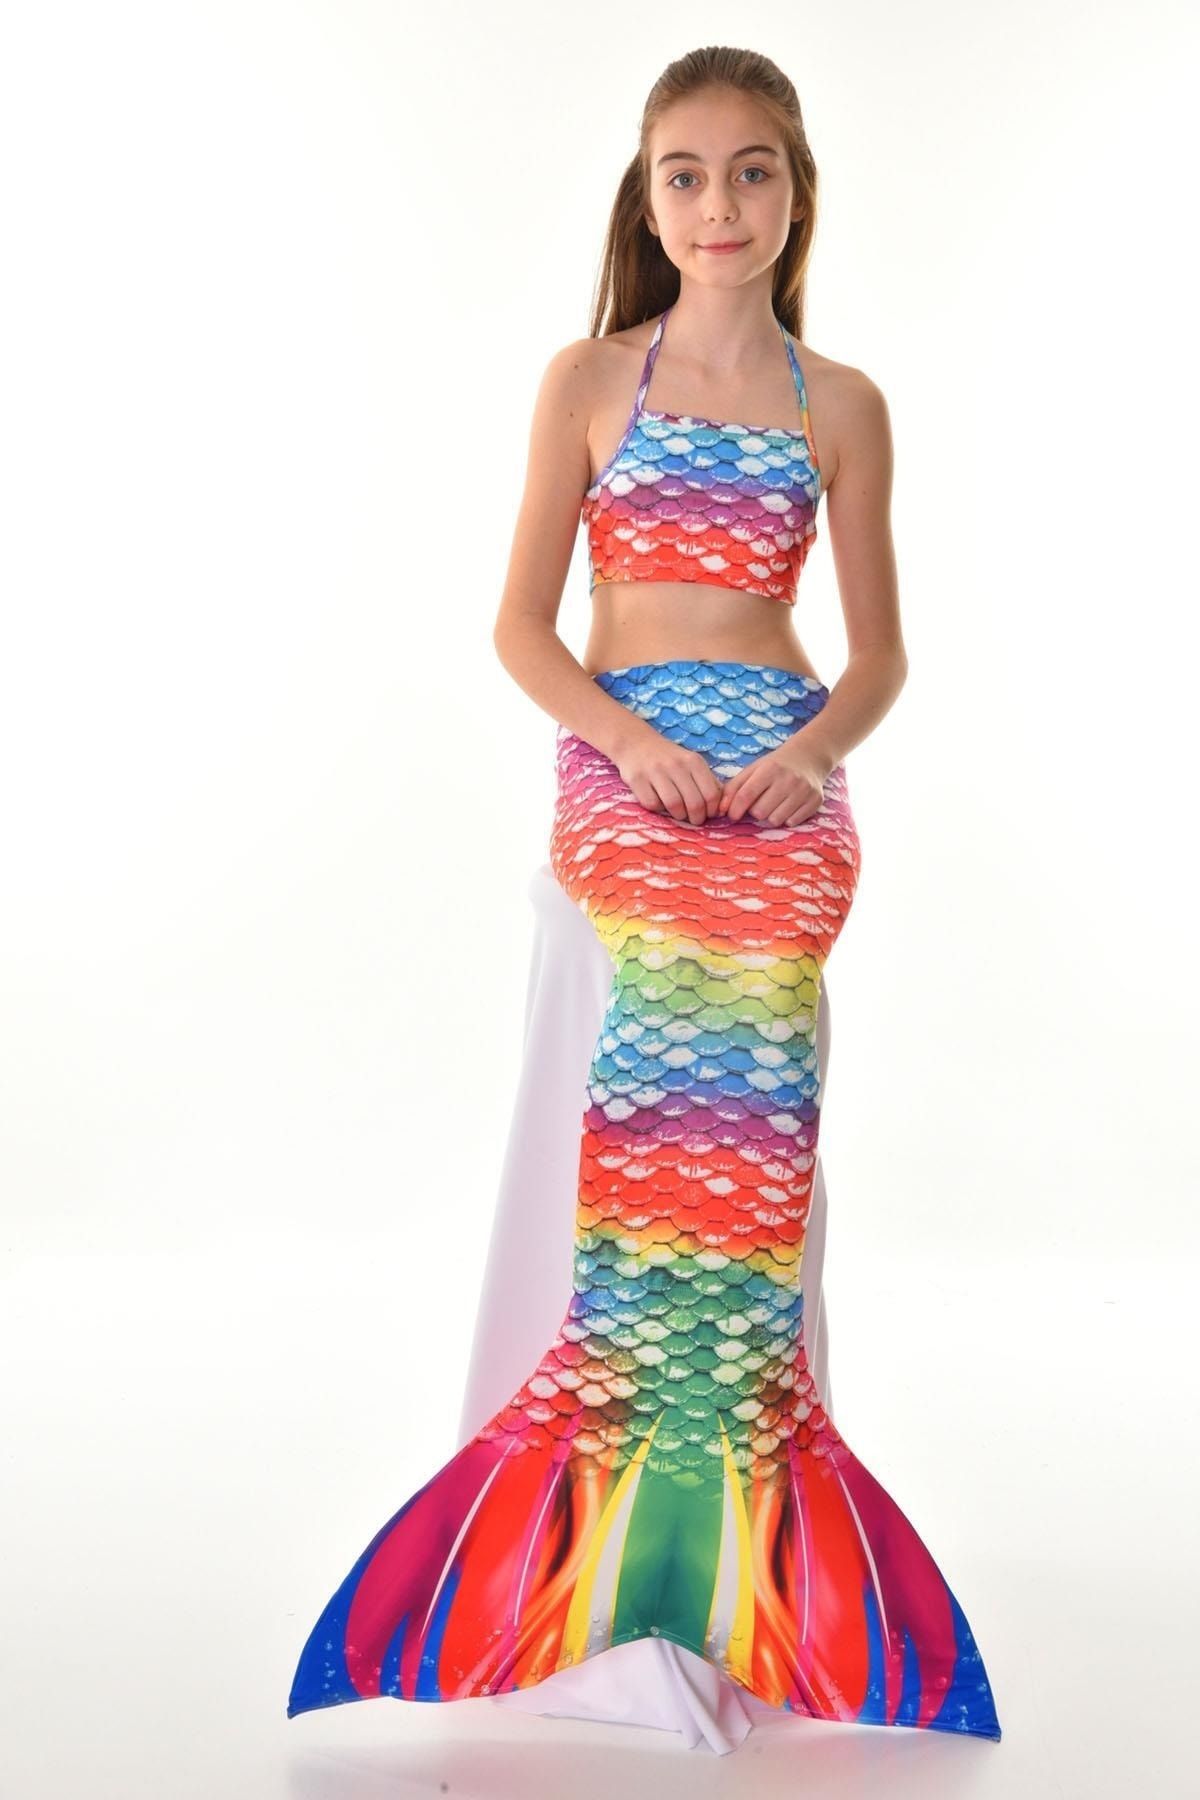 Rs Ramuni Deniz Kızı Kostümü 3'lü Set Renkli